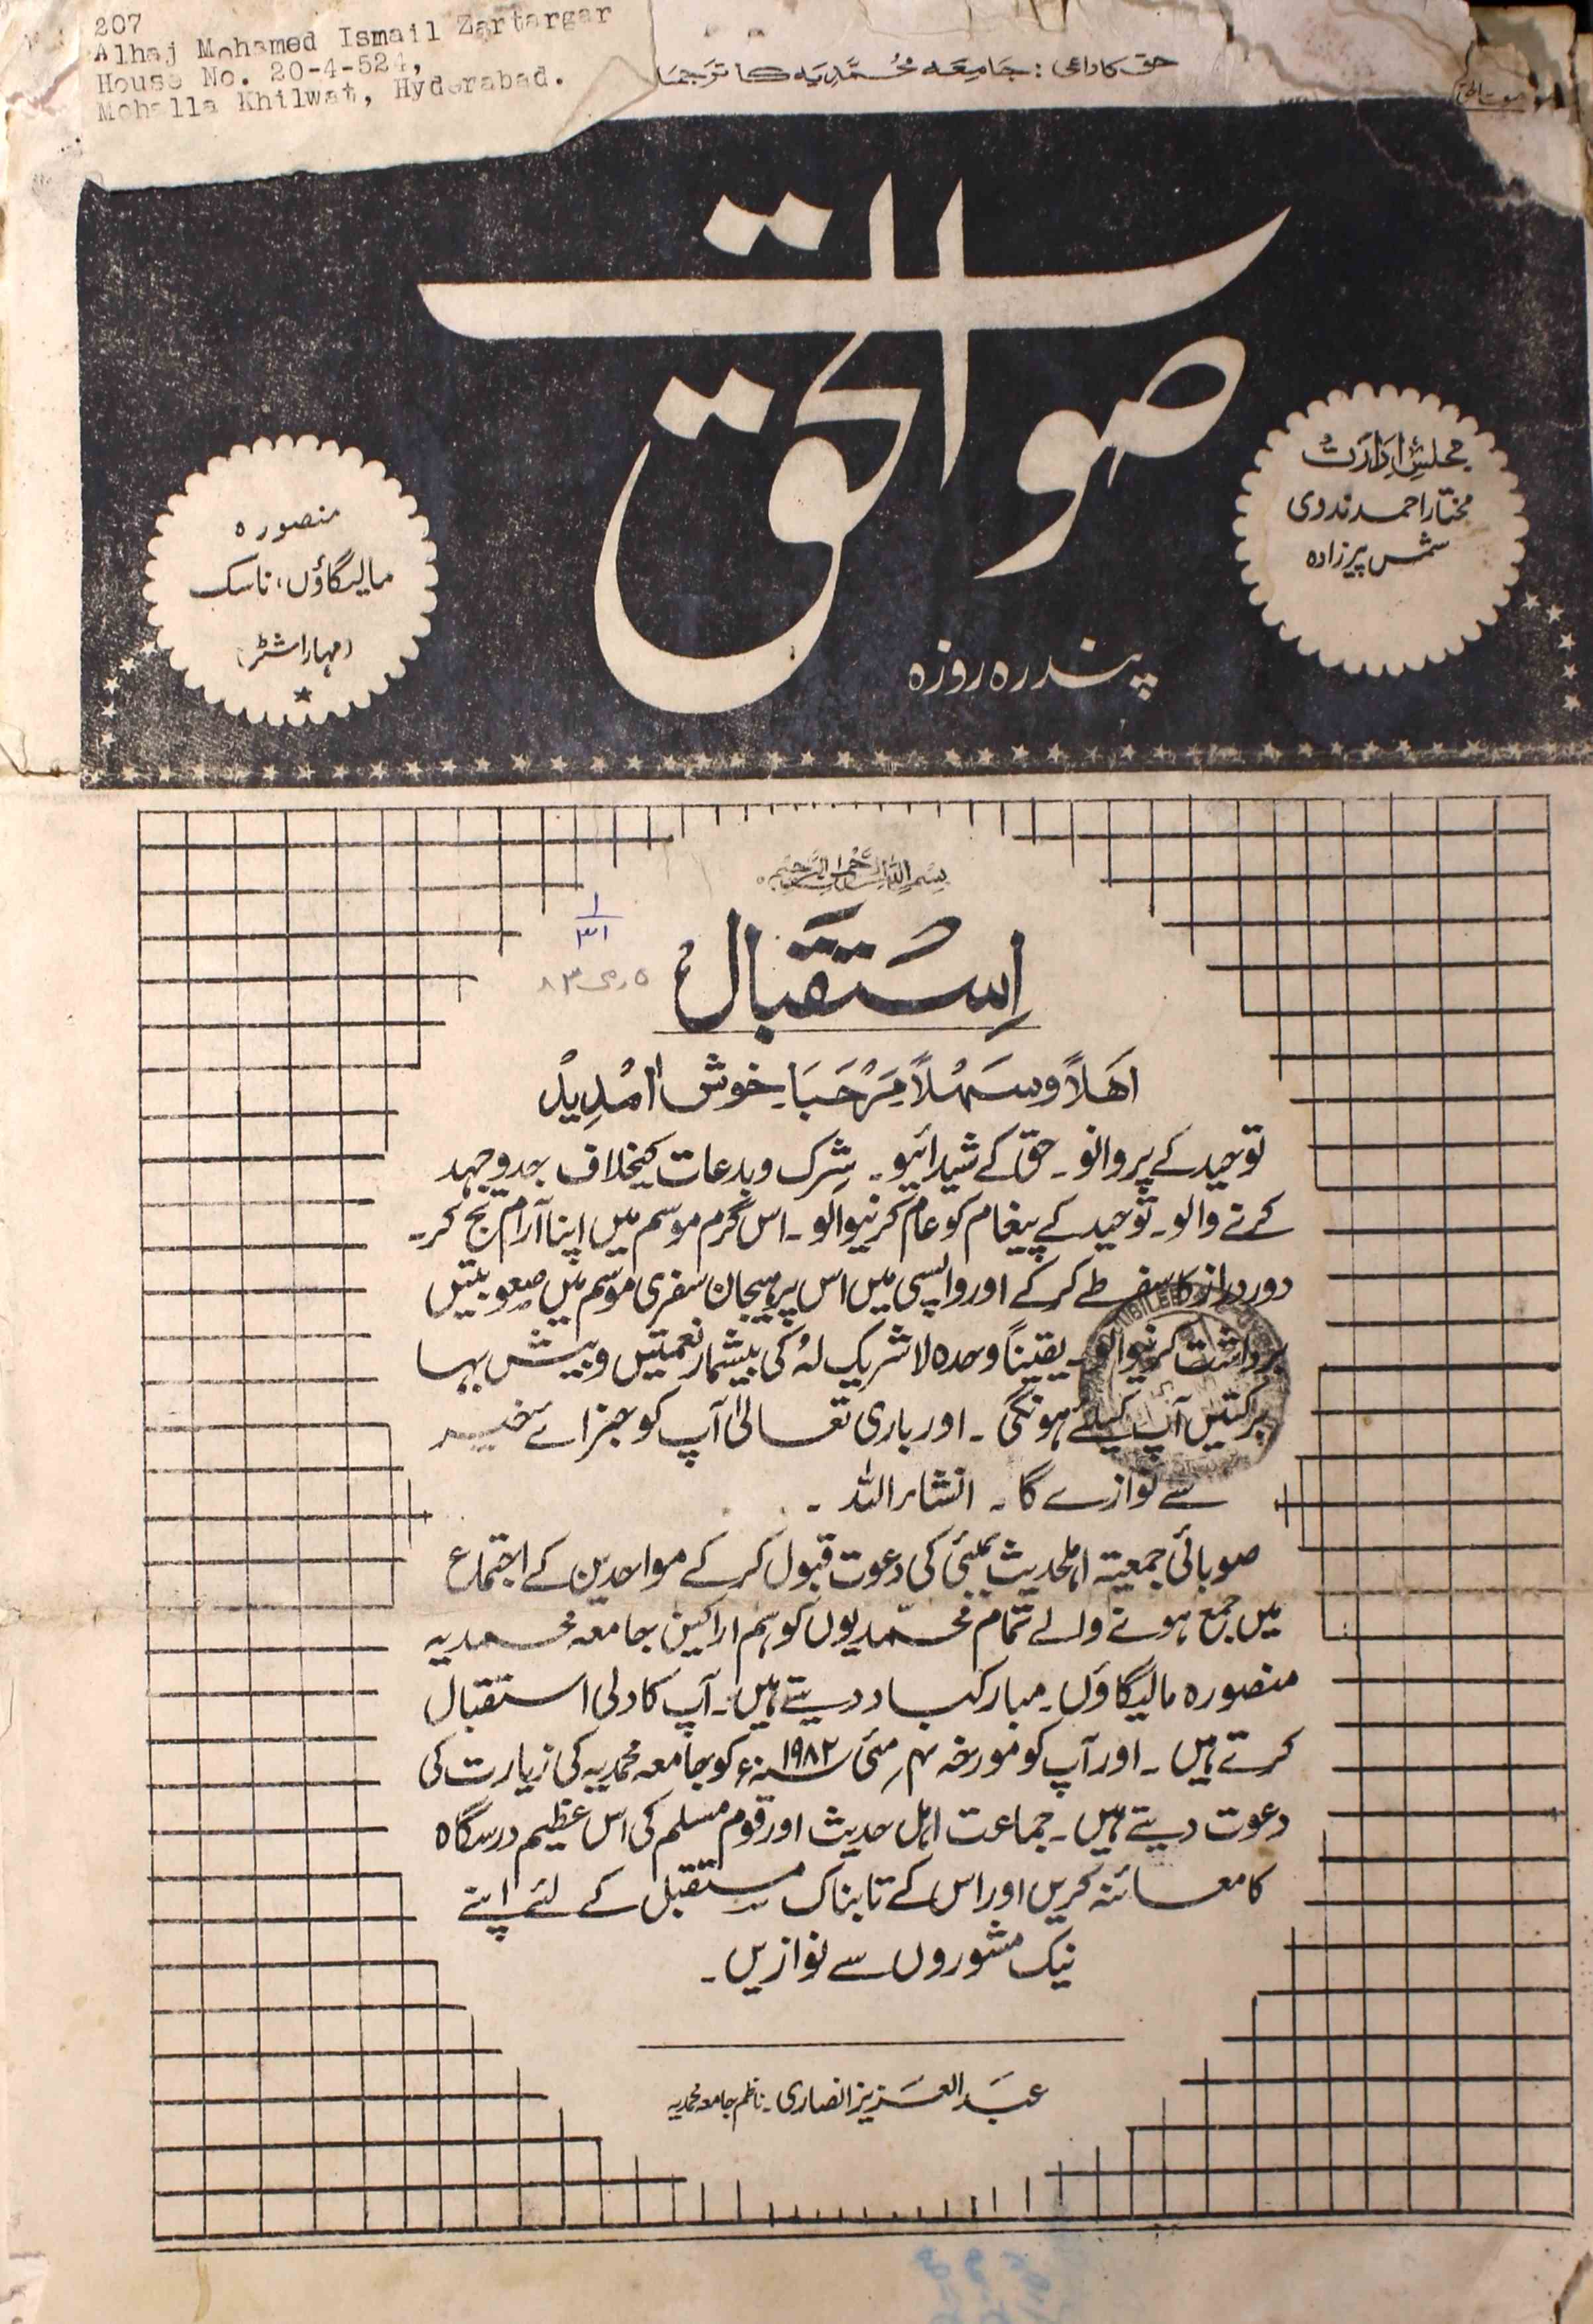 Sawt Al Haq Jild 1 Shumara 31 May 1982-Svk-Shumara Number-031